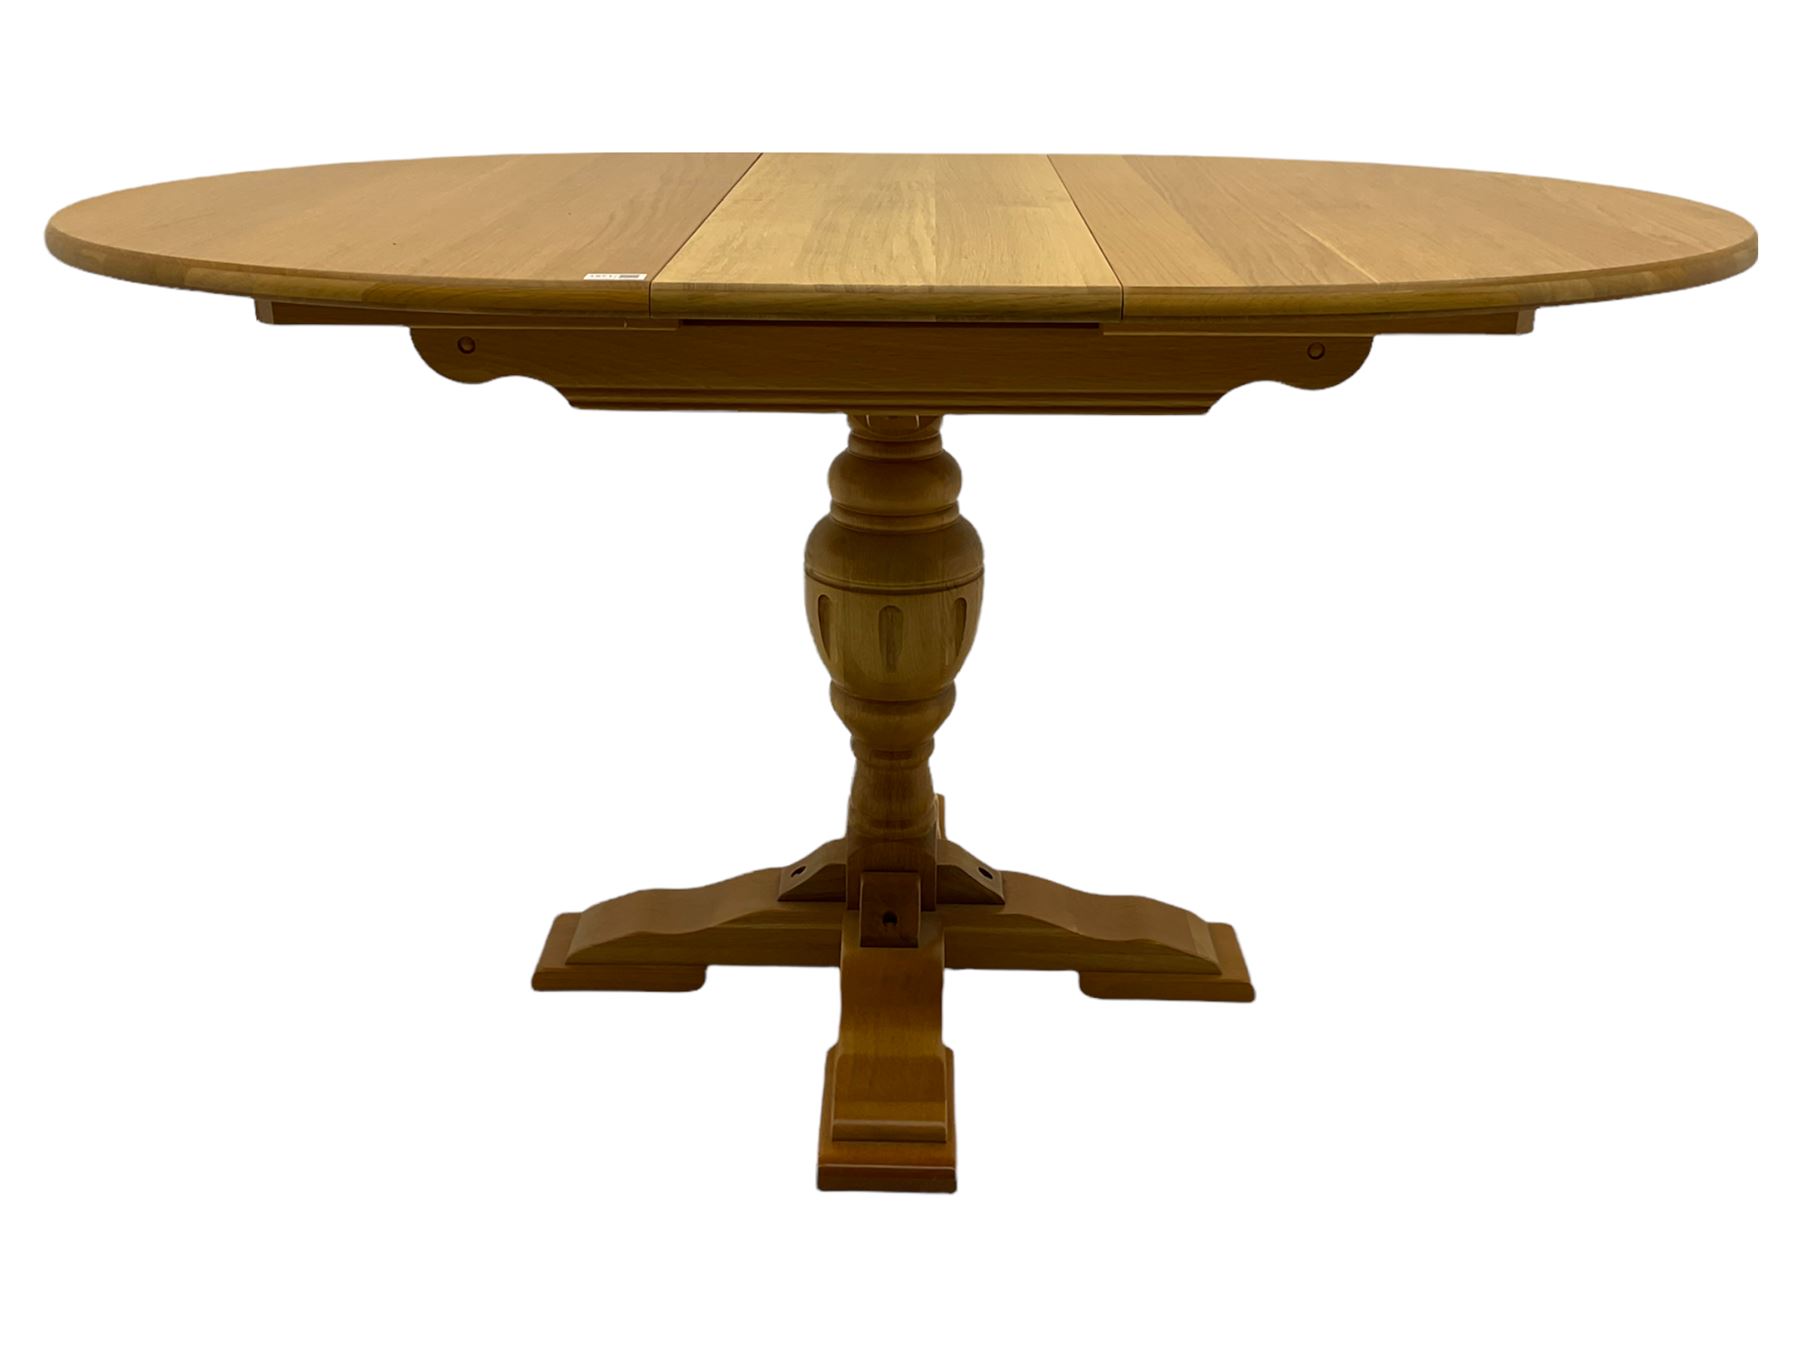 Light oak oval extending dining table - Image 3 of 5